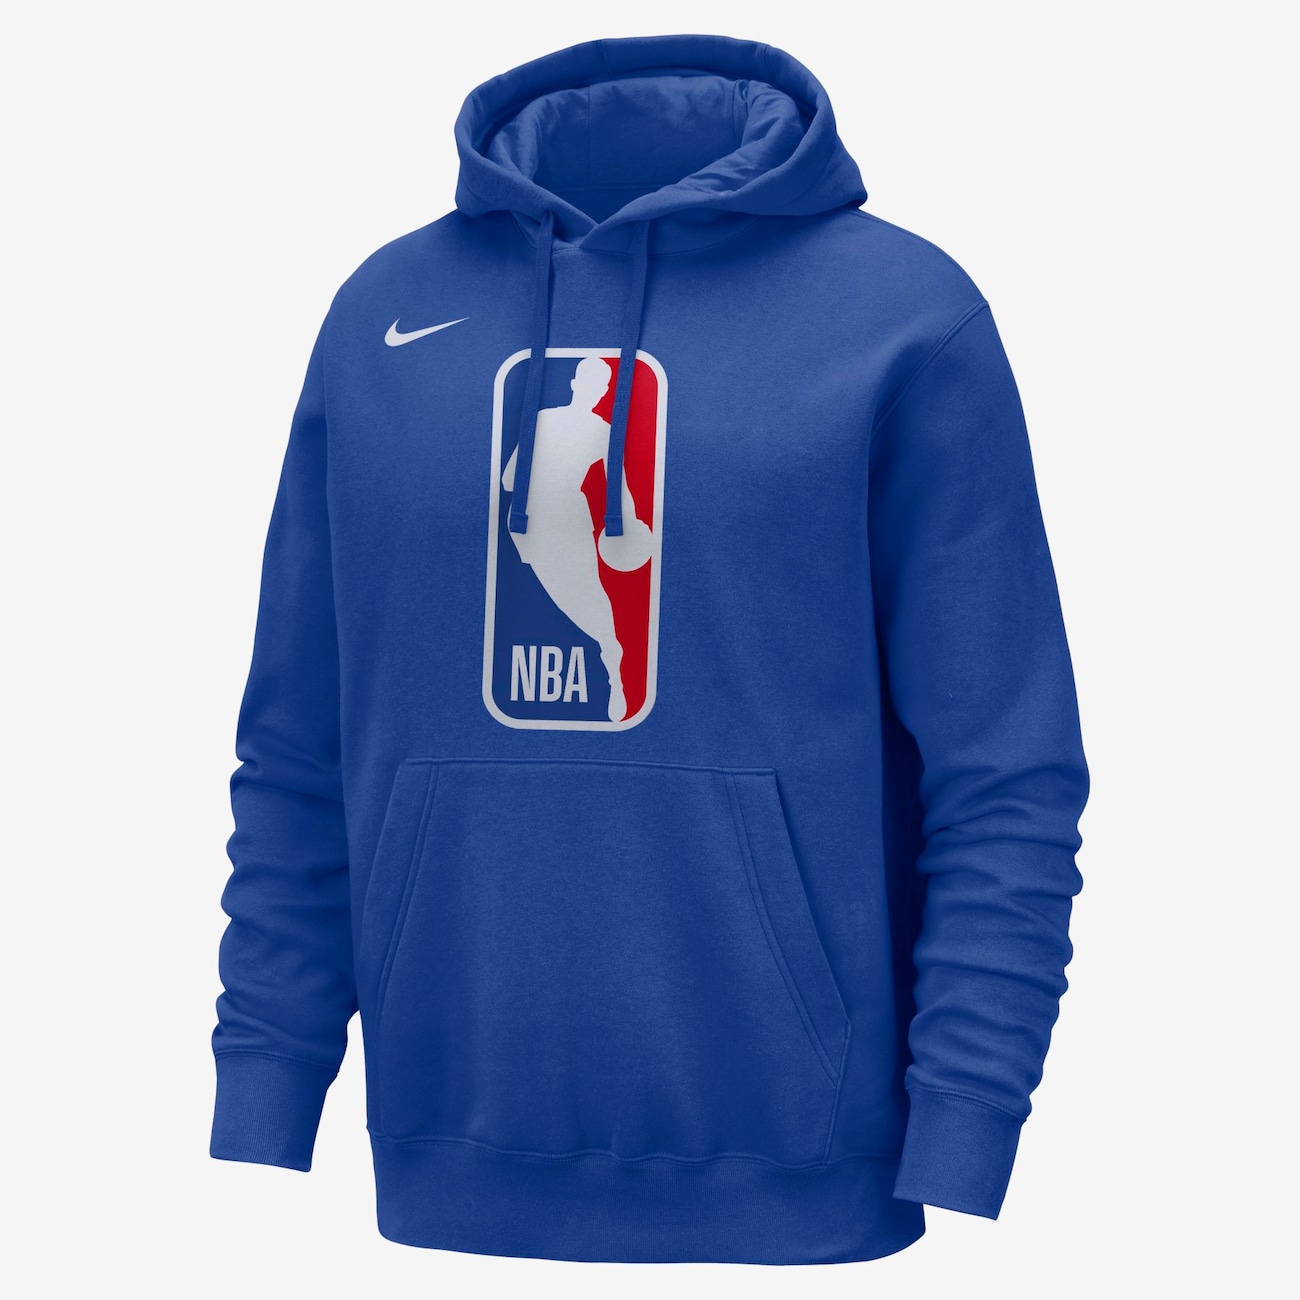 Blusão Nike NBA Team 31 Club Masculino